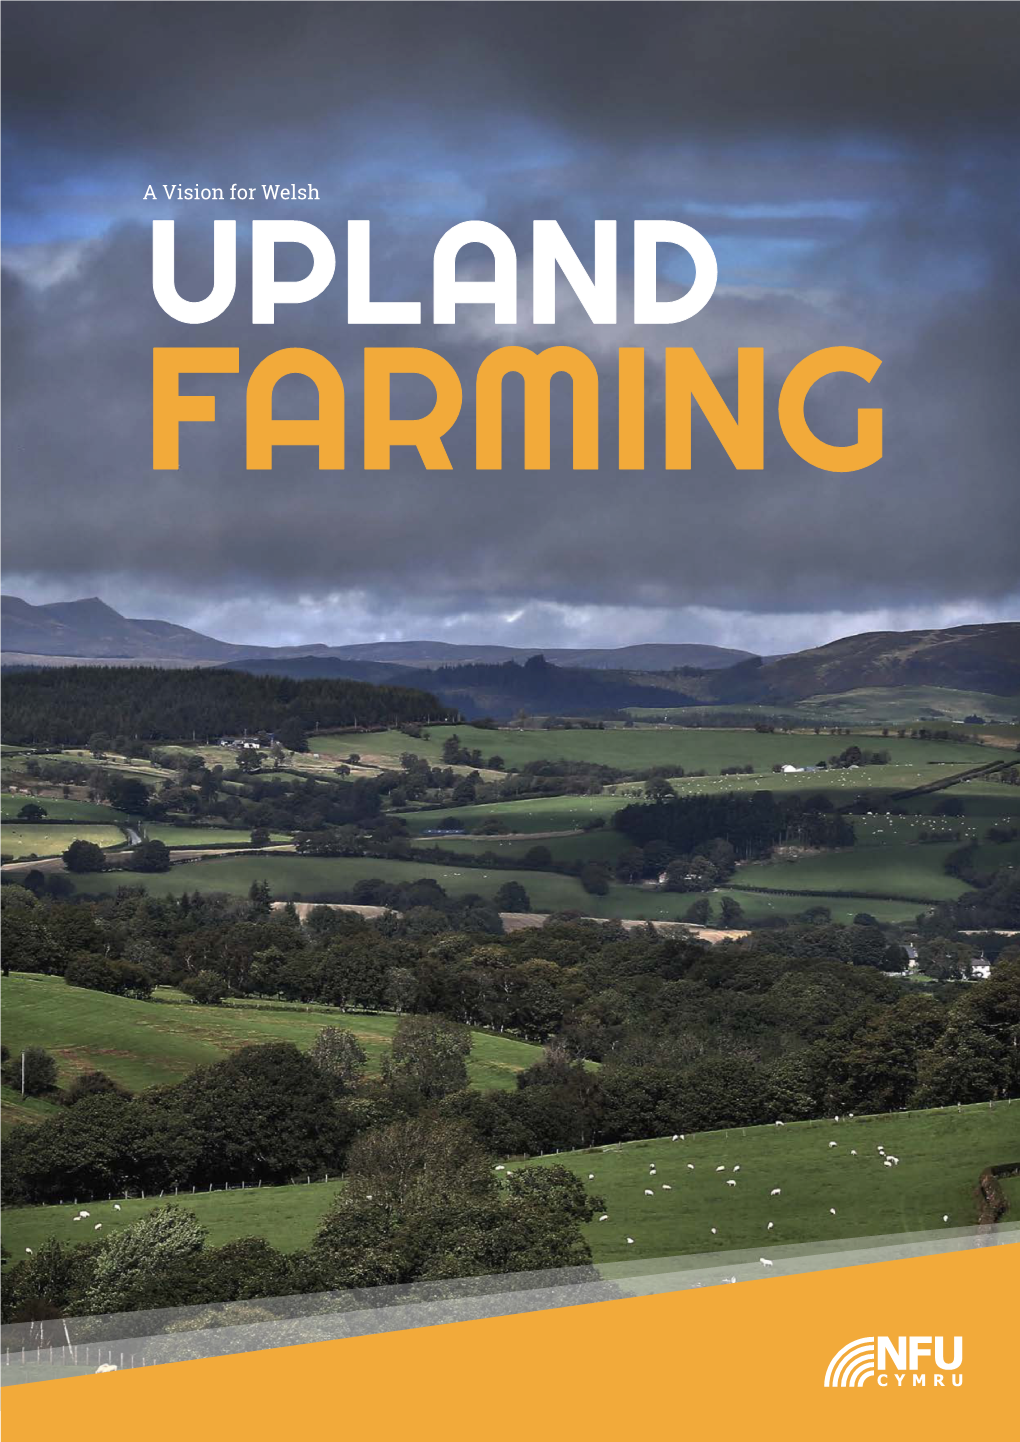 Vision for Welsh UPLAND FARMING NFU CYMRU a VISION for WELSH UPLAND FARMING